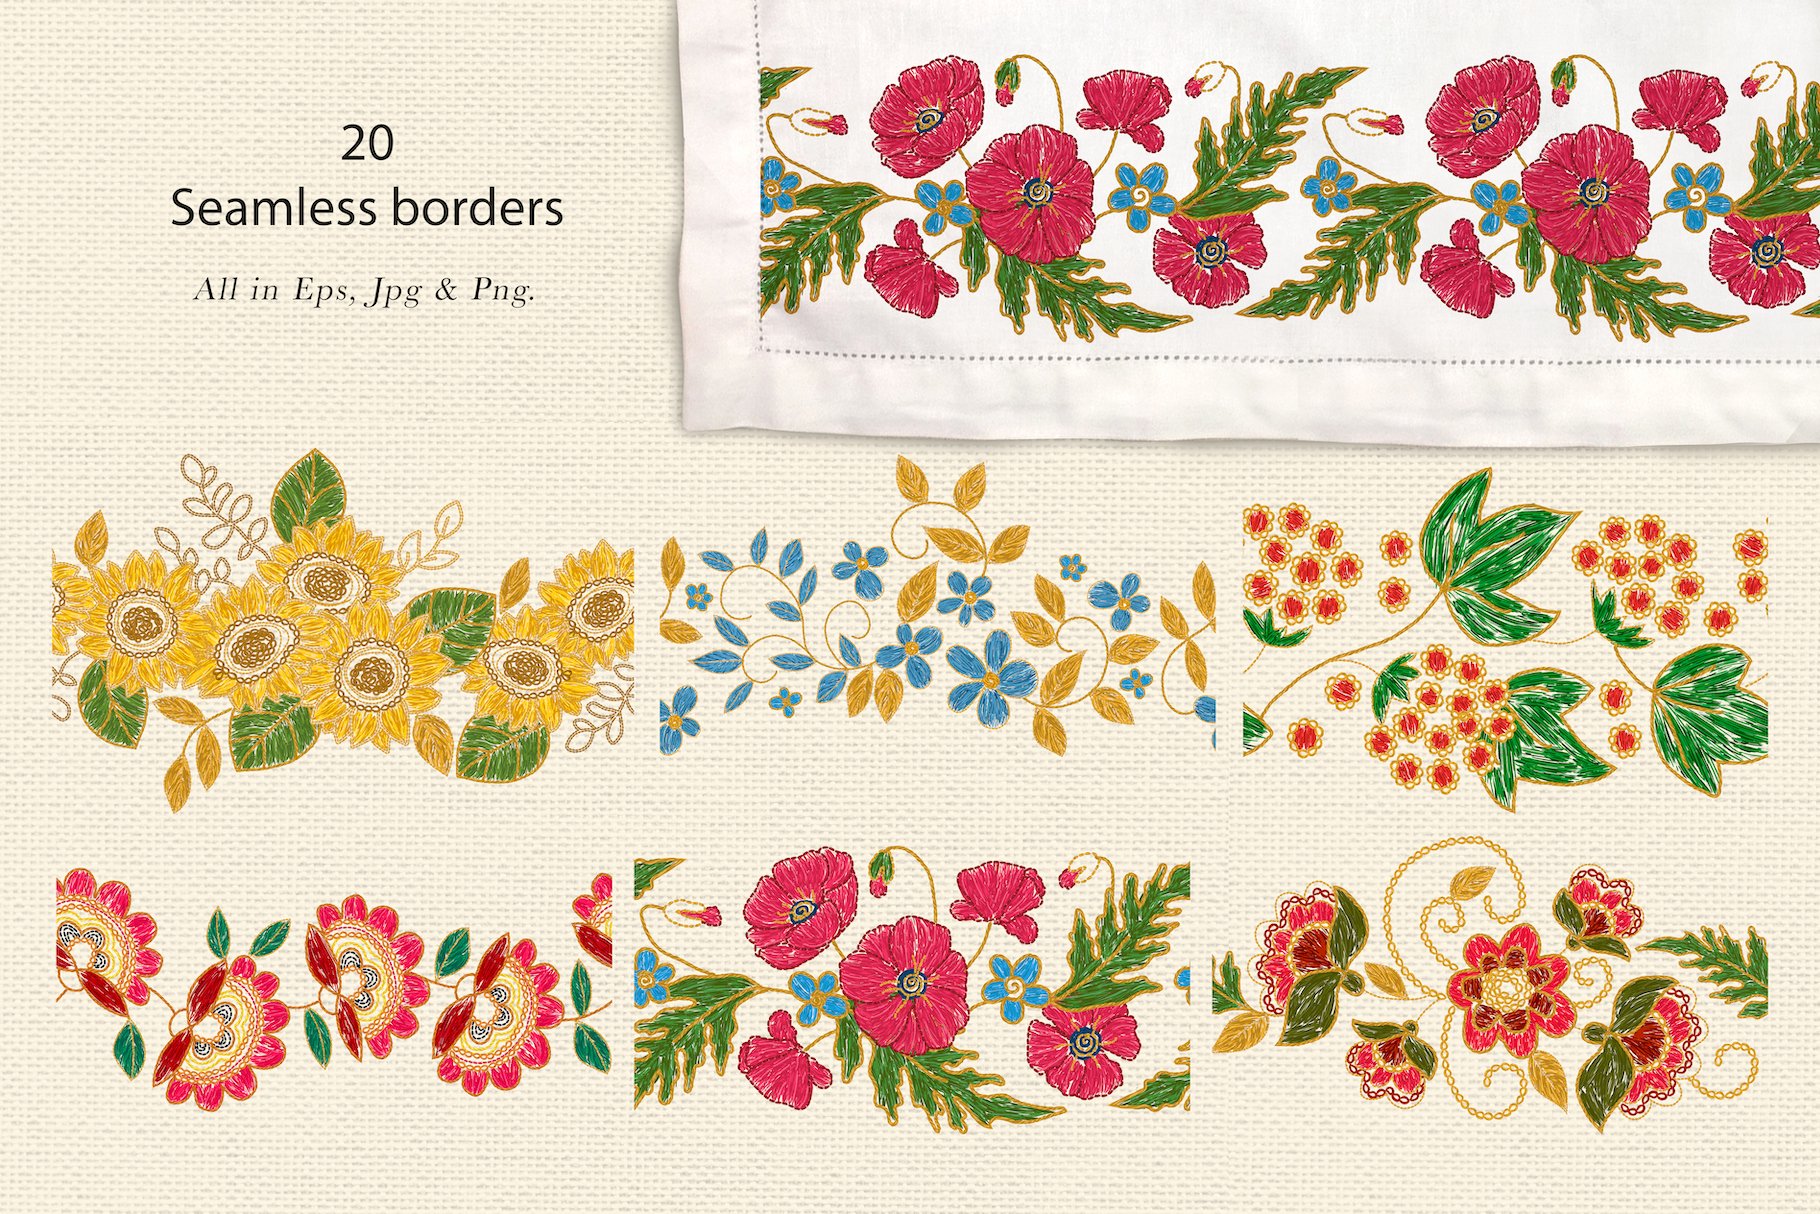 Ukrainian Folk Embroidery Embroidered Flowers On Stock Photo 770384584